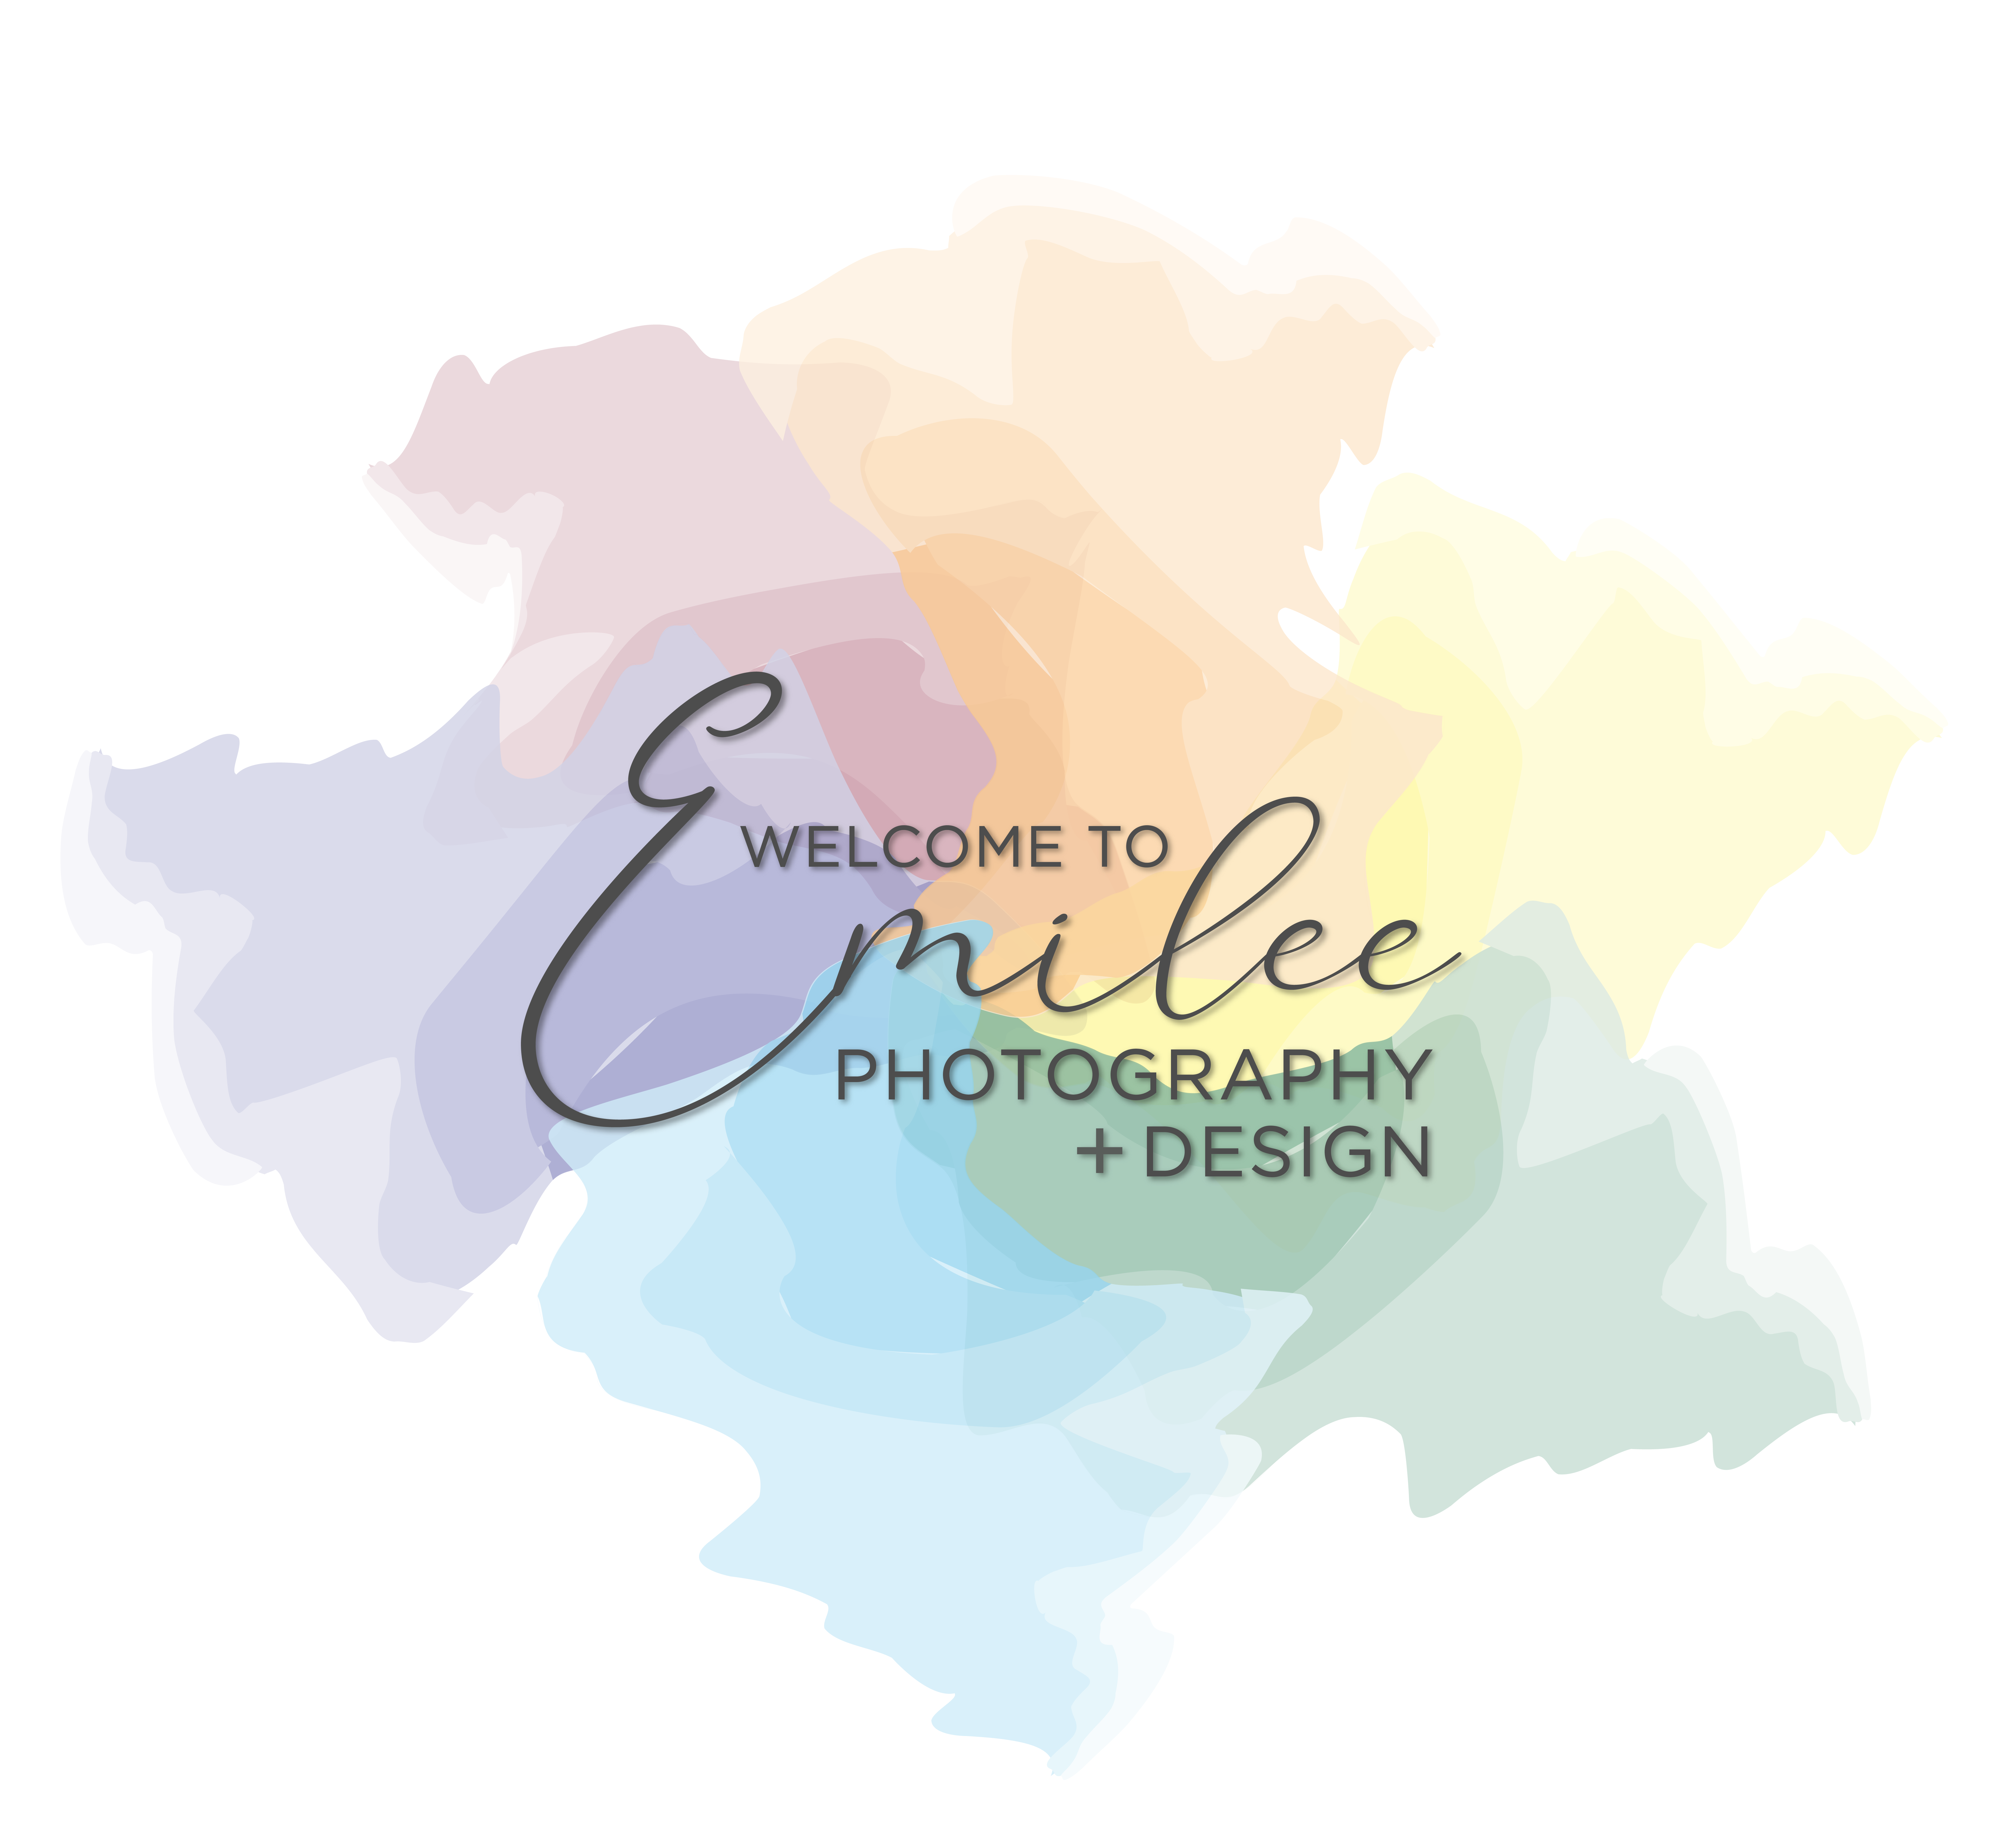 Emilee Photography + Design